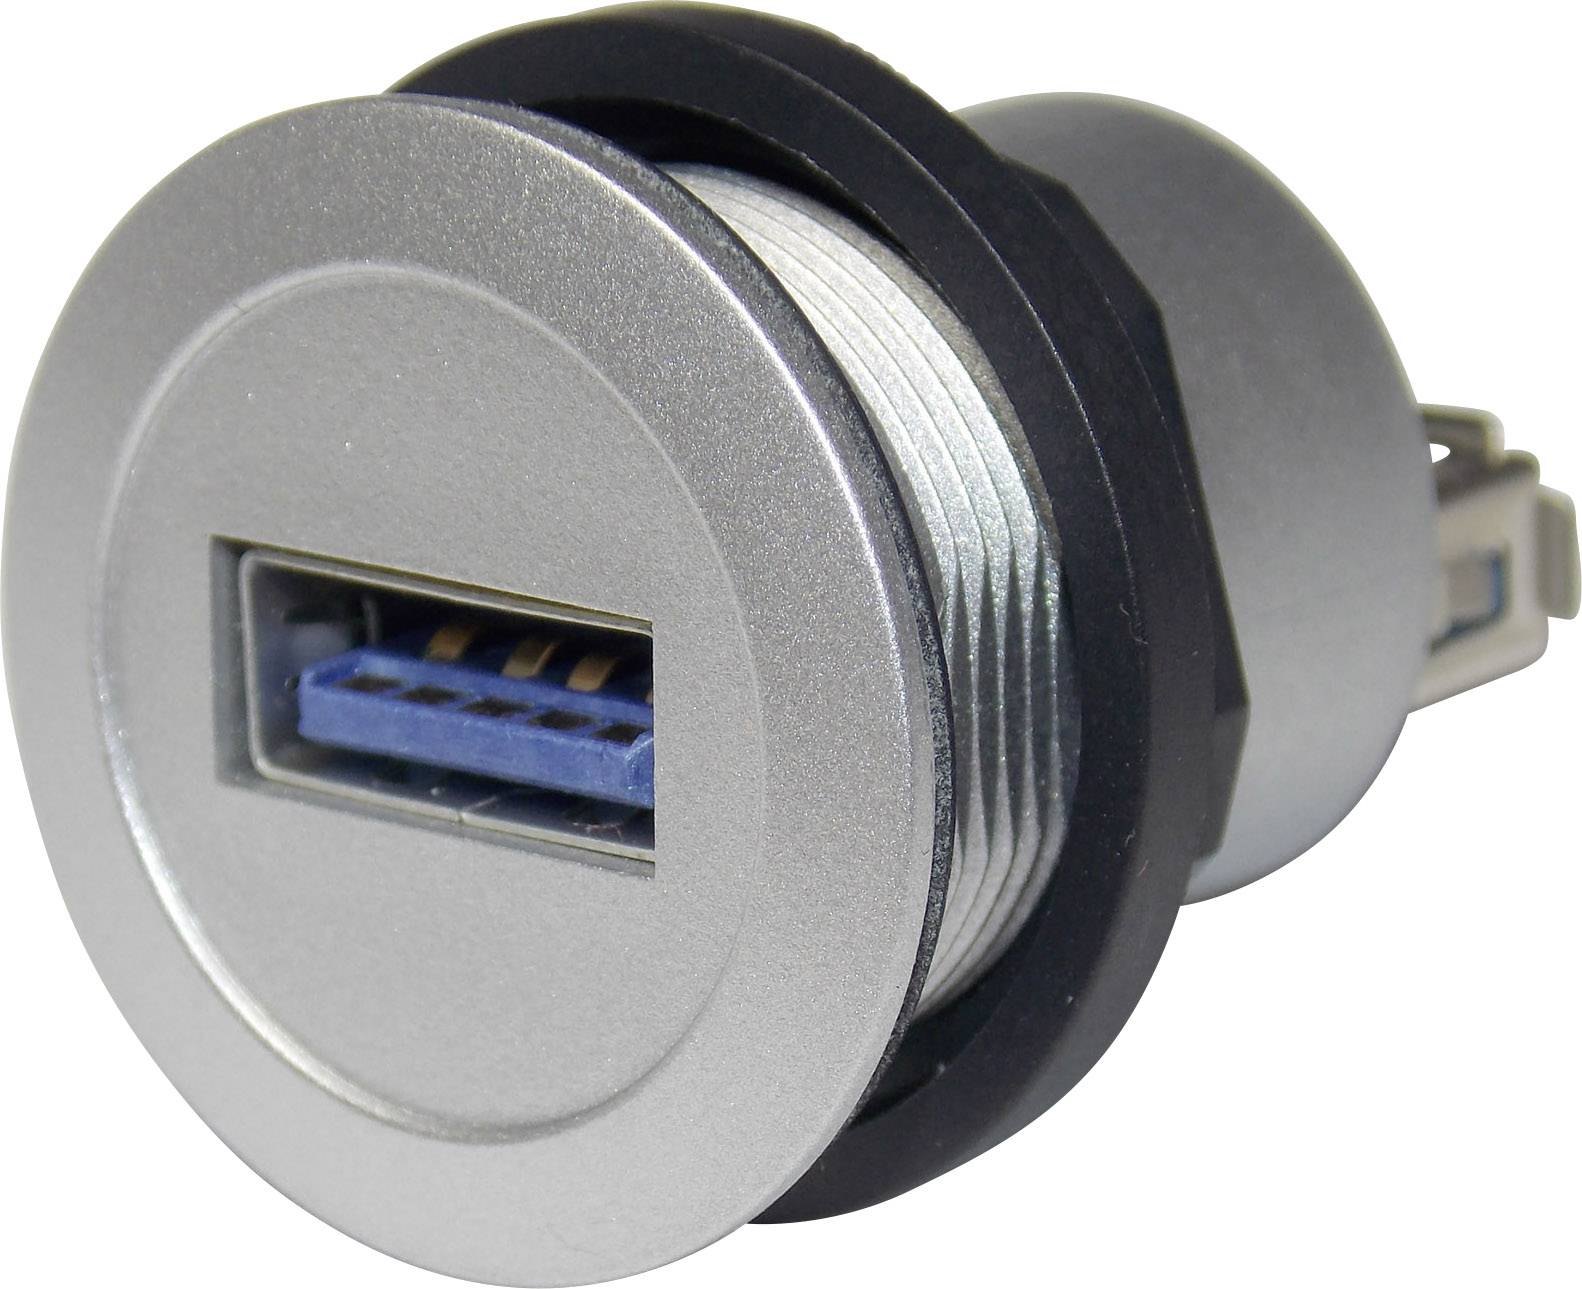 SHVP 14-05025: Connettore USB 3.1 C su presa Ethernet RJ45 + 3 prese USB da  reichelt elektronik